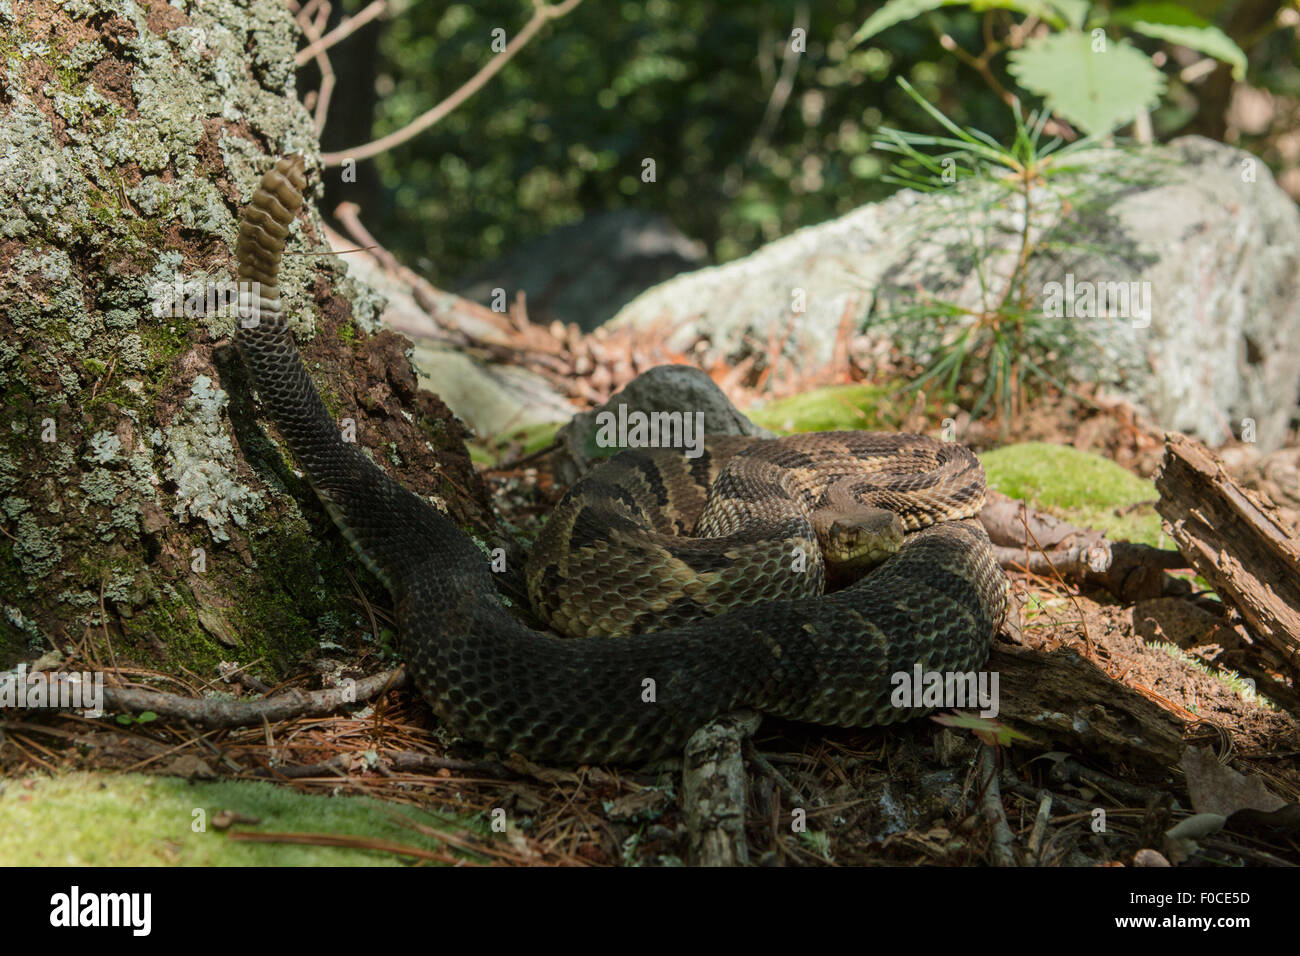 Crotalus horridus - Timber rattle snake Stock Photo